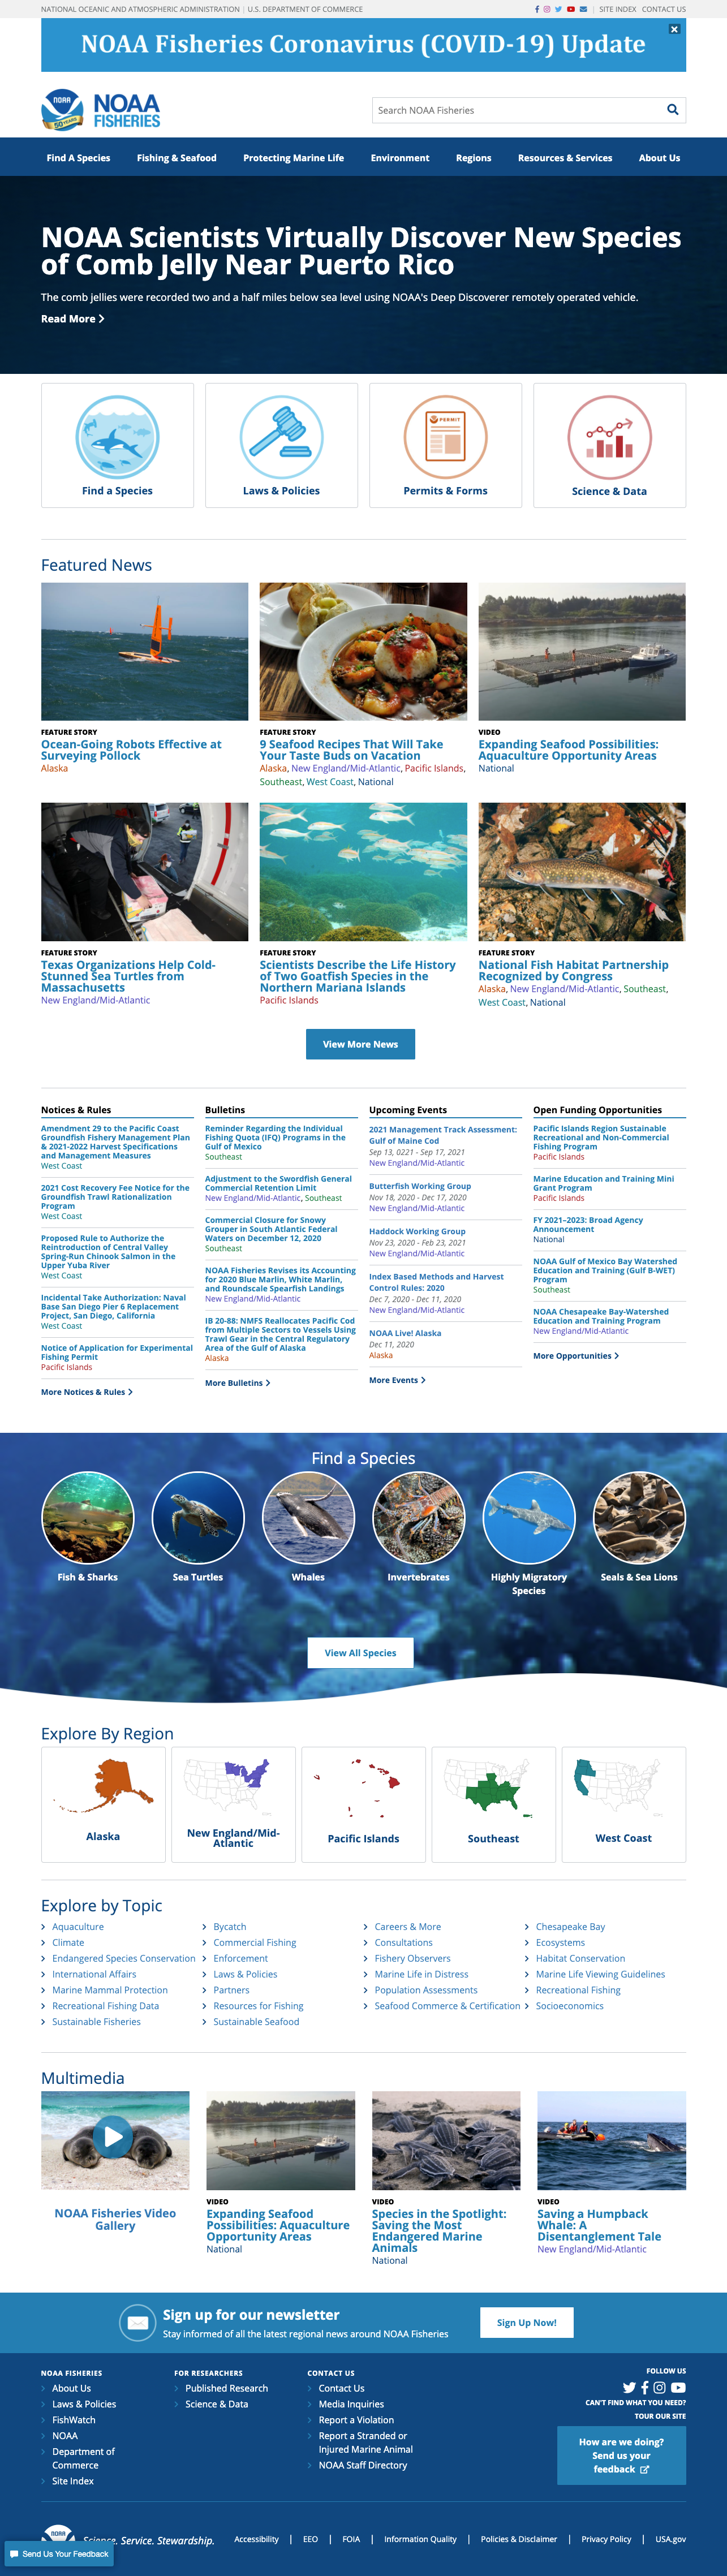 Vega Digital Awards Winner - NOAA Fisheries